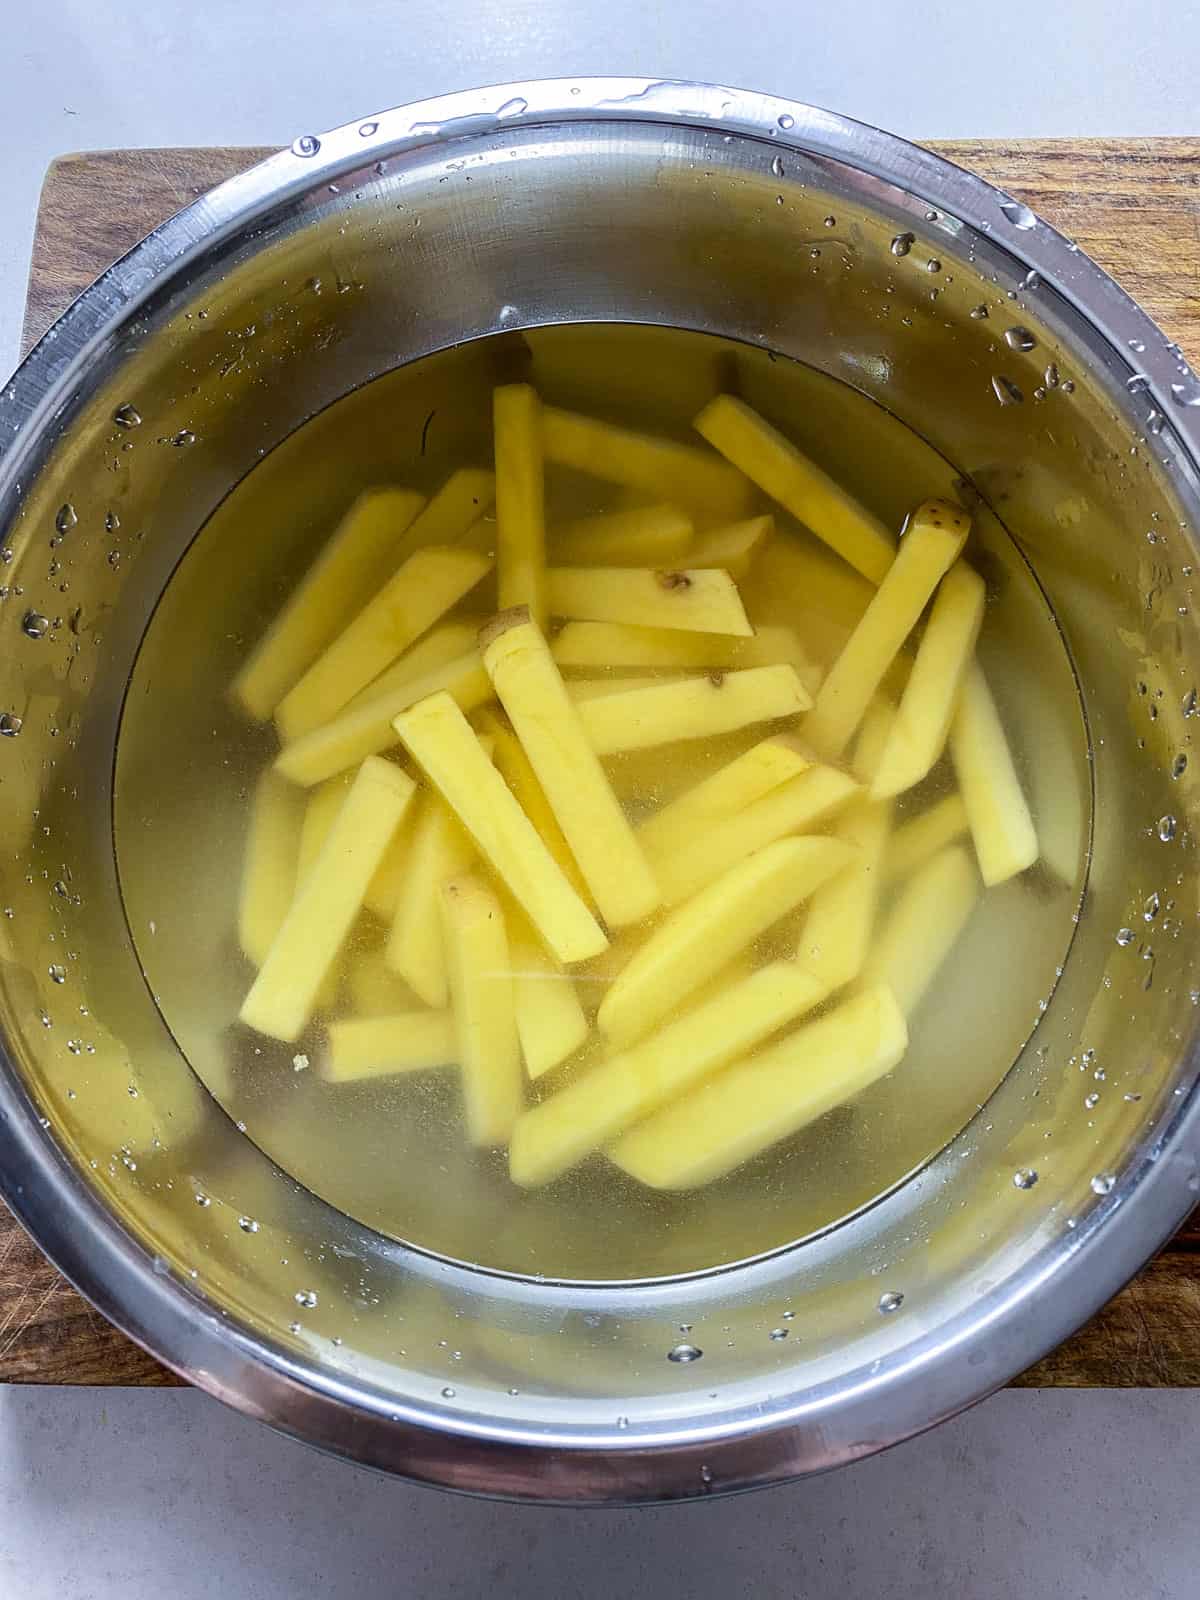 Soak the cut potatoes in a bowl of water.